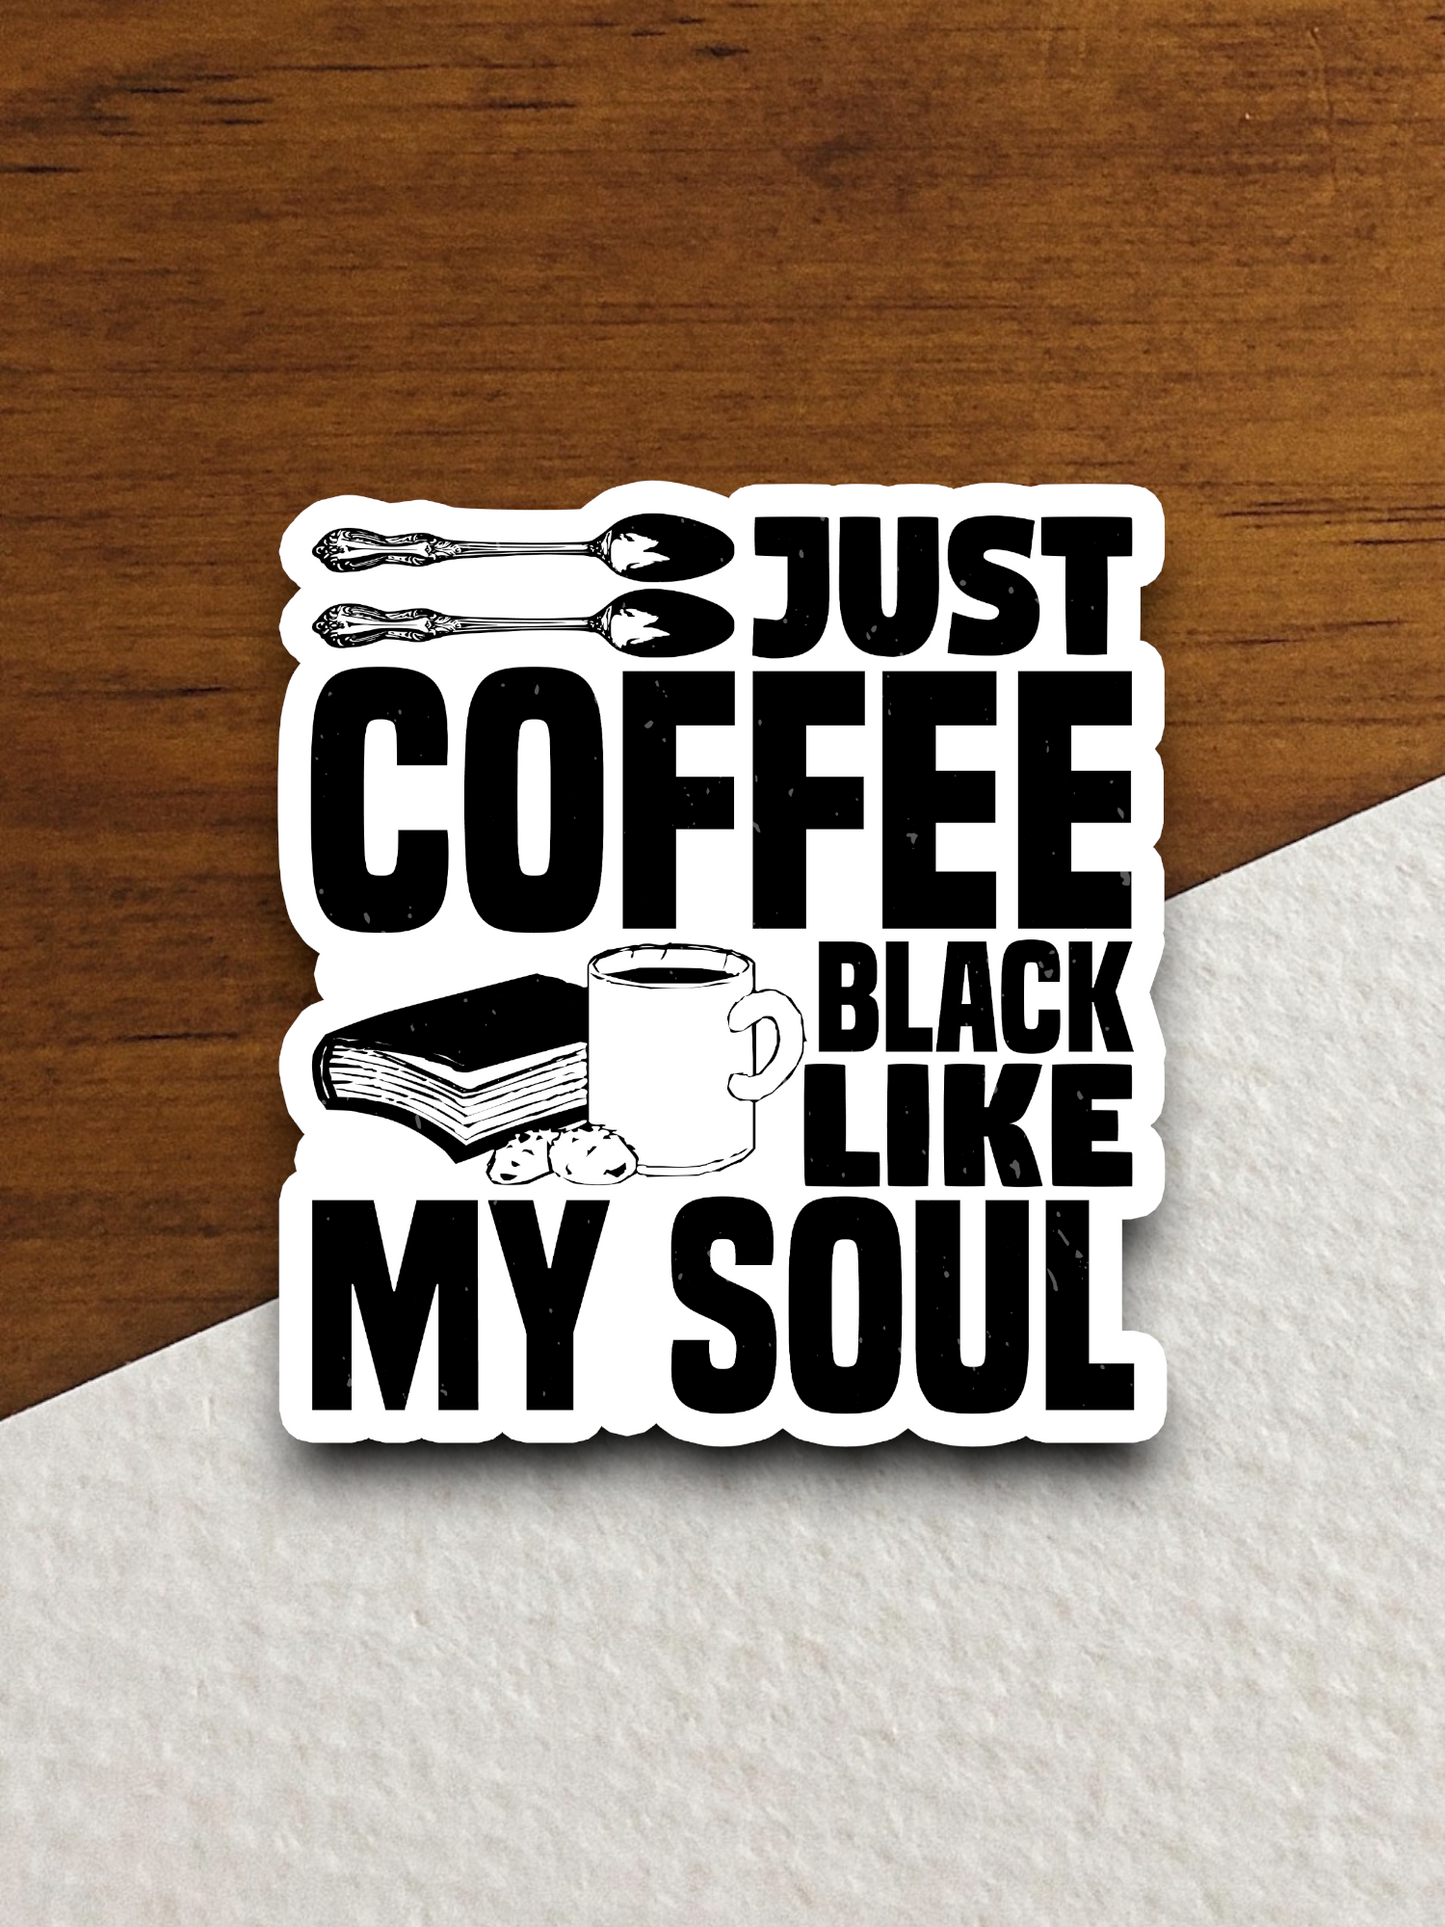 Just Coffee Black Like My Soul - Coffee Sticker